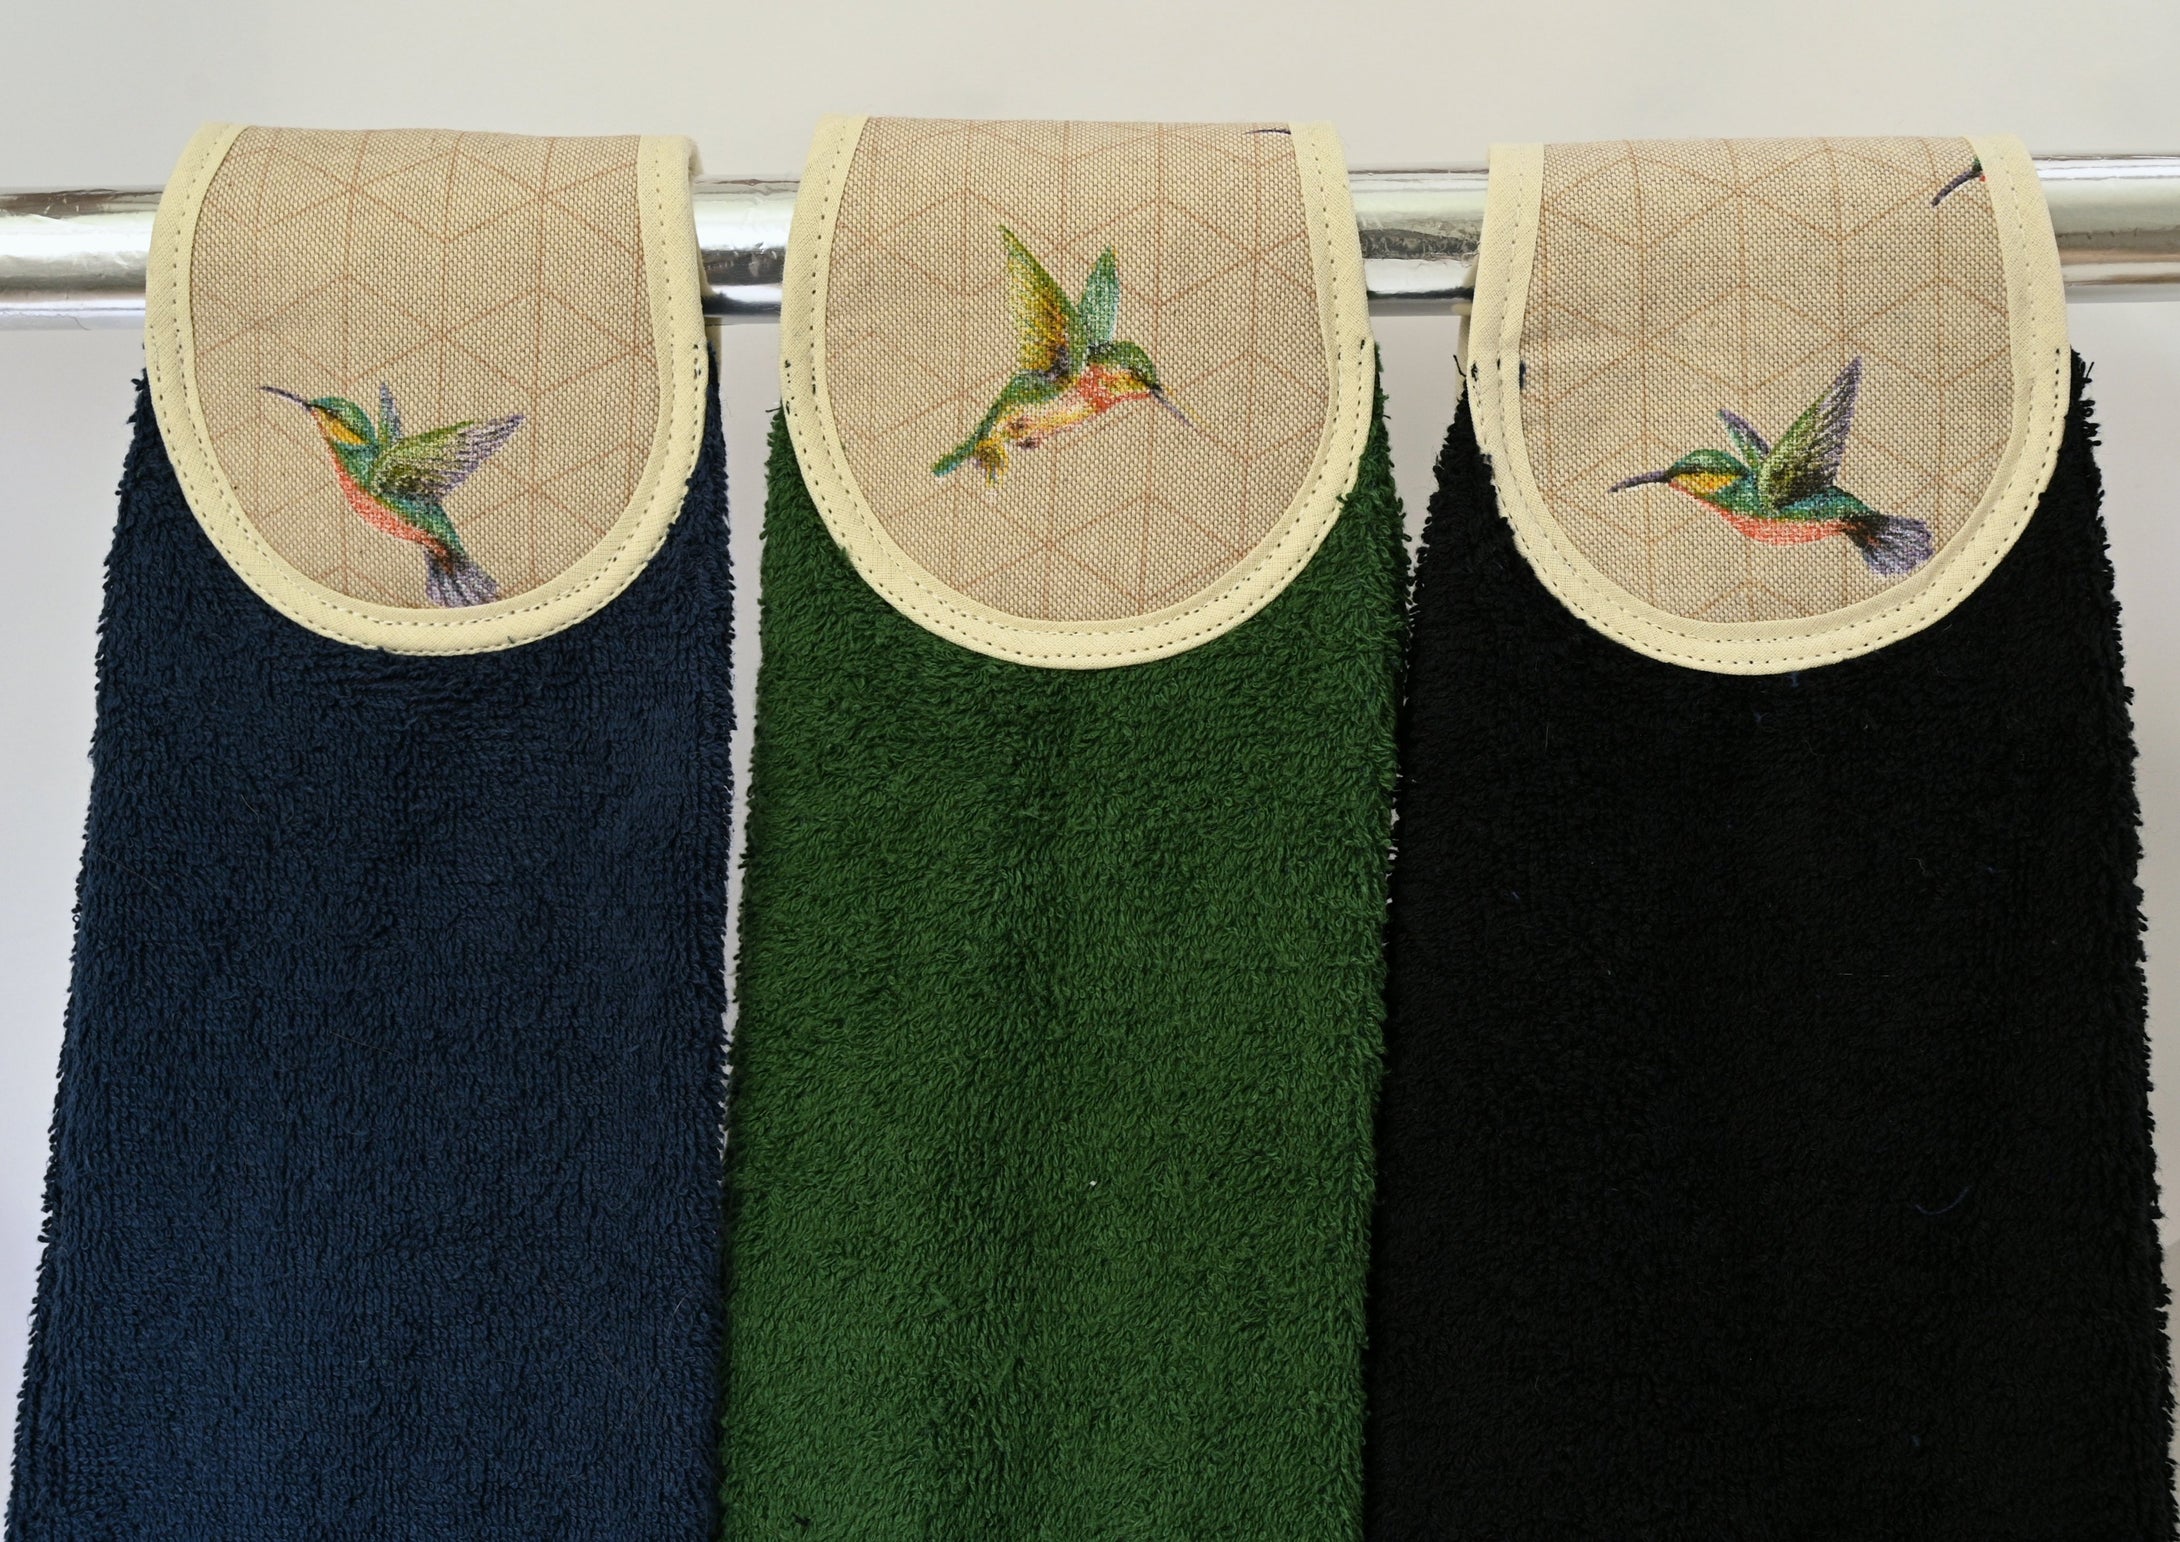 Hang ups, Kitchen towels, Humming Bird on Black, Navy Blue or Green Towel